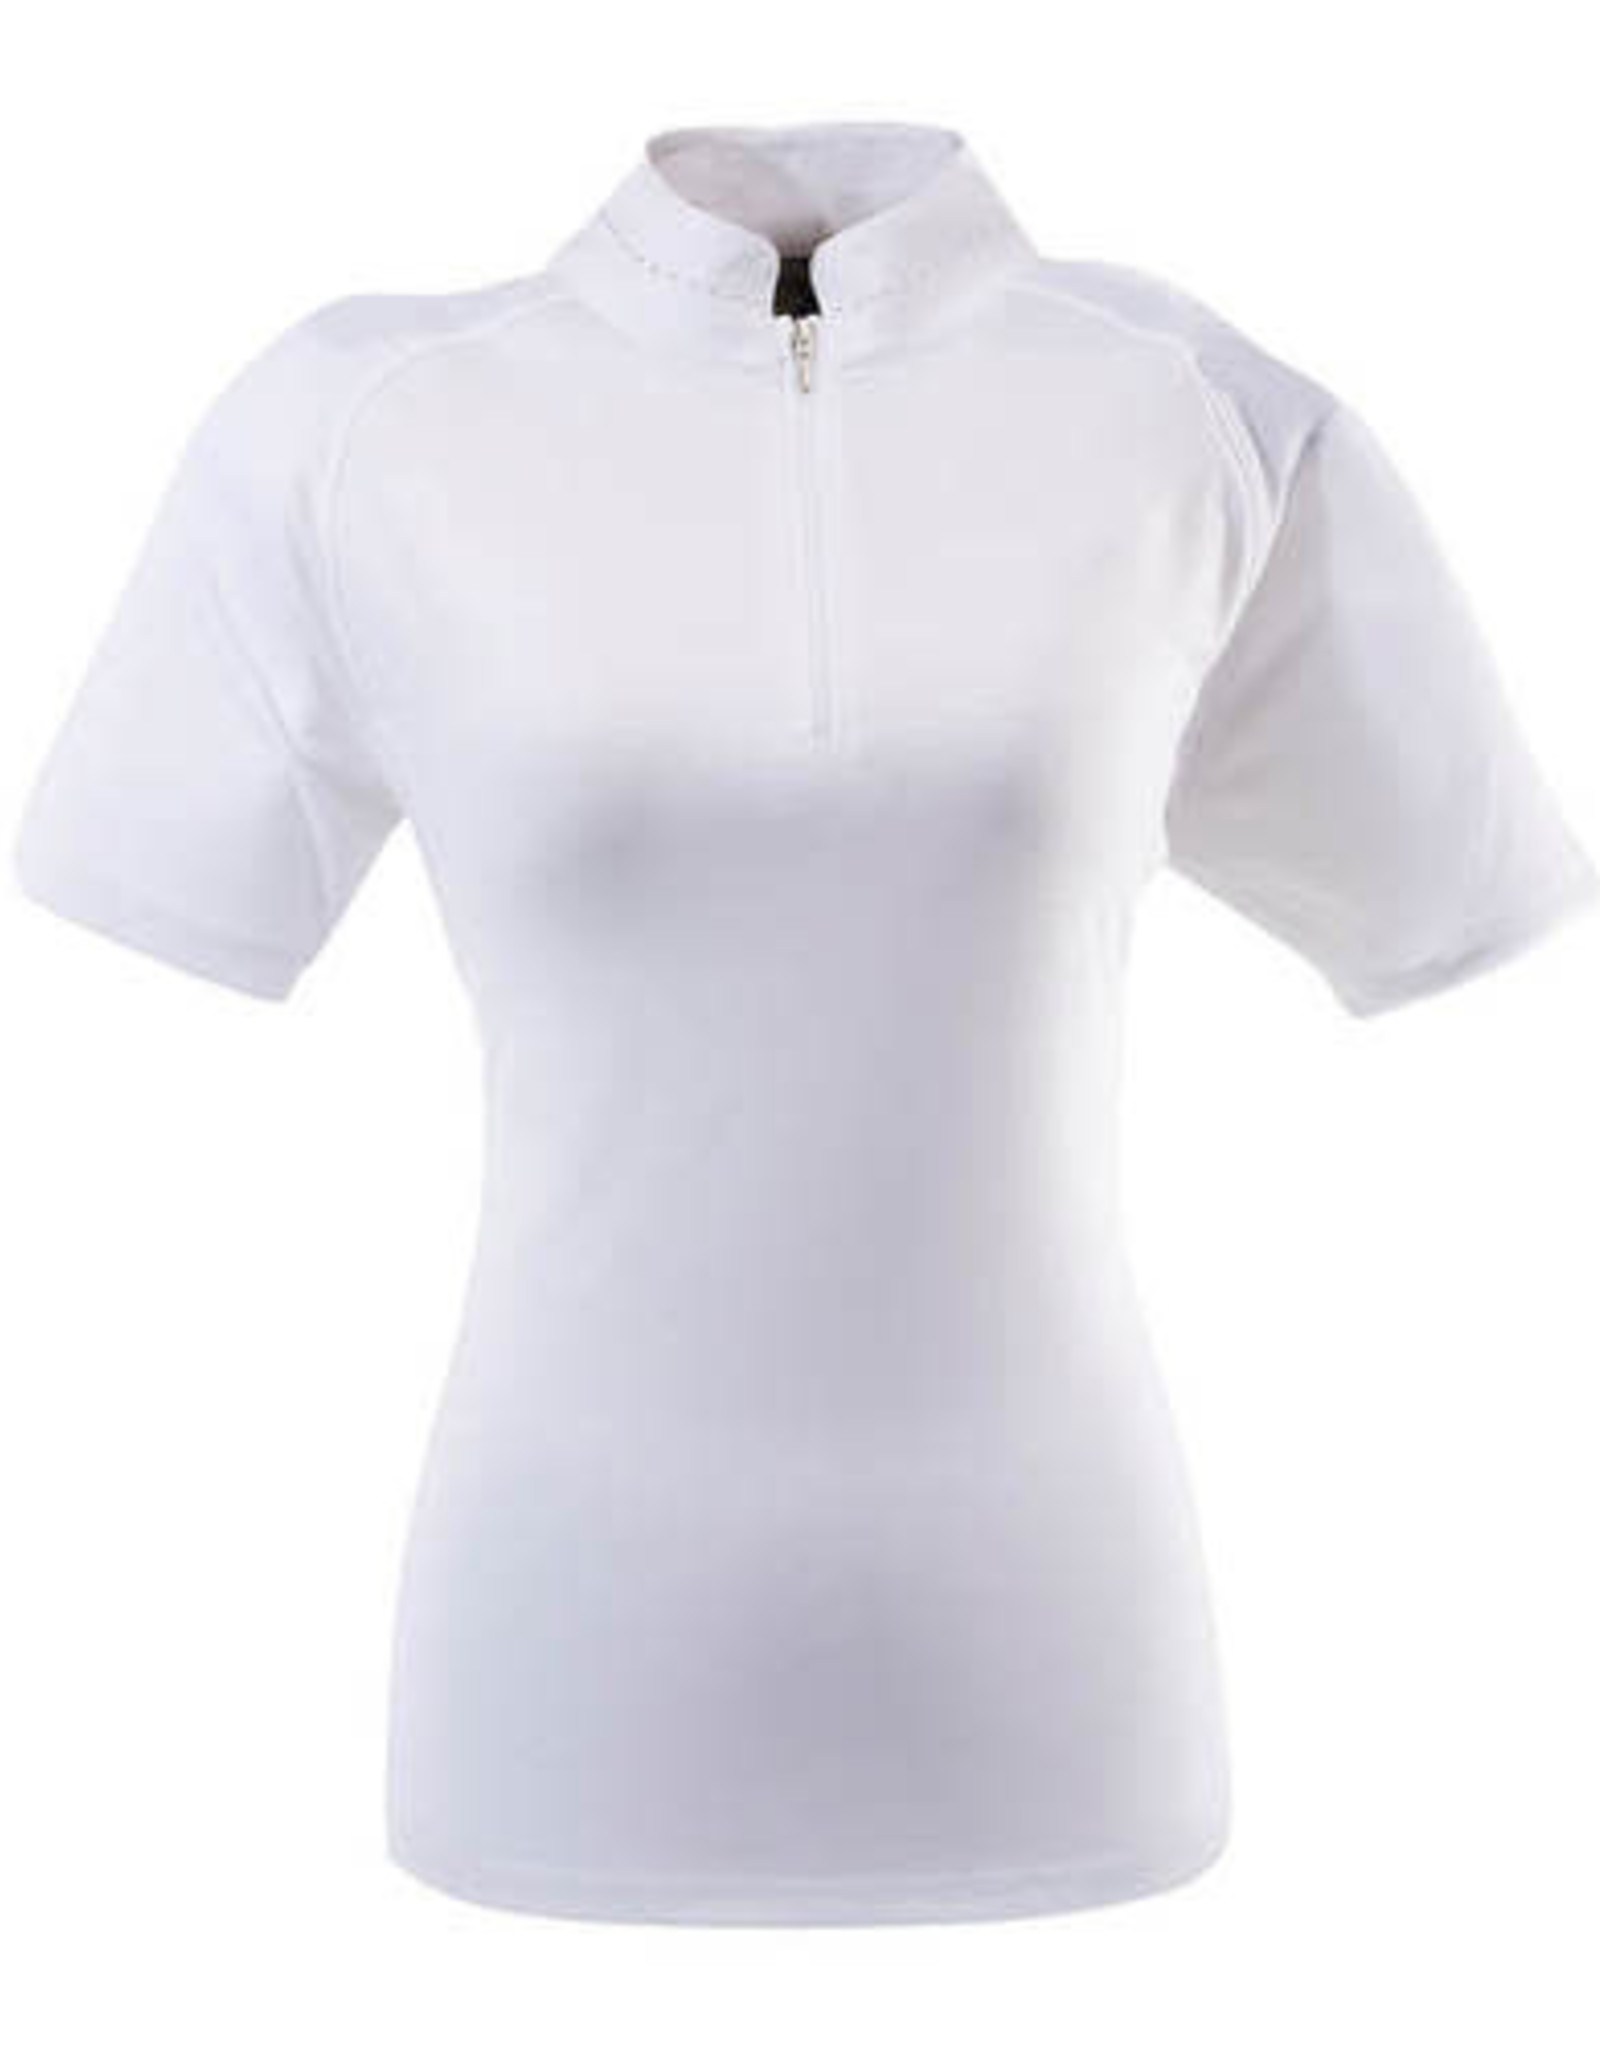 Ovation Elegance Sparkle Show Shirt- Short Sleeve